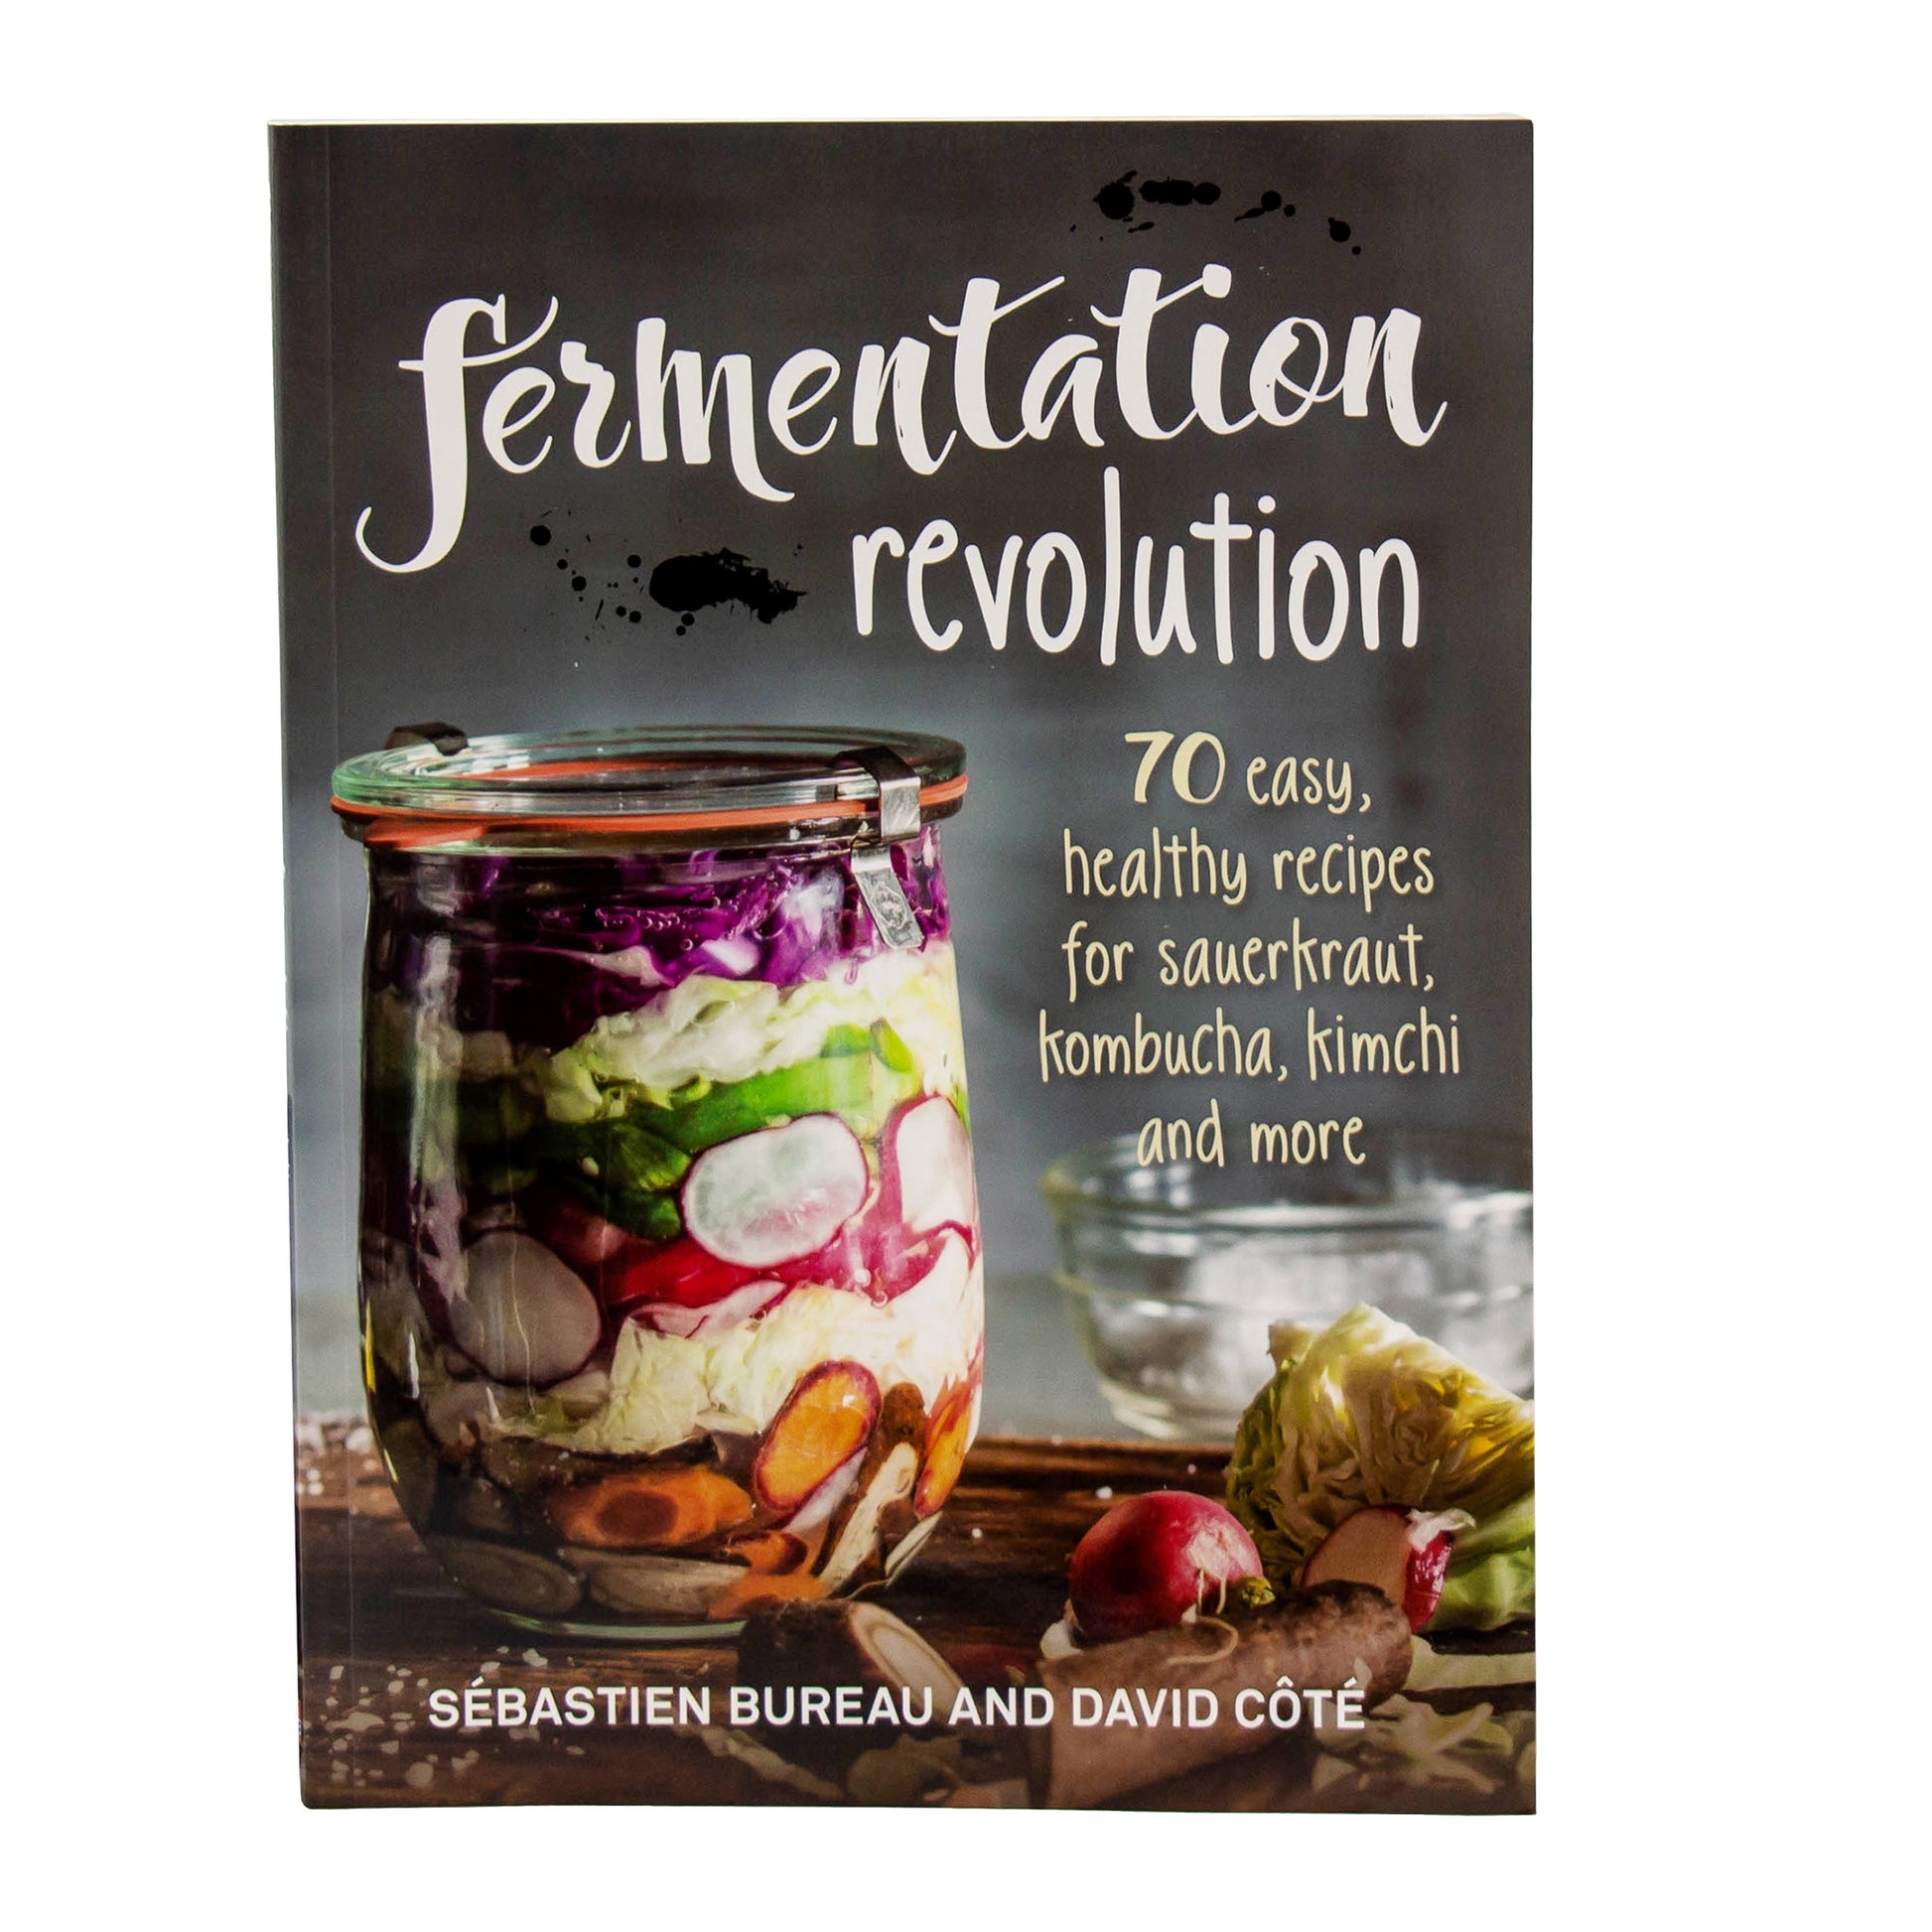 fermentation revolution book with 70 easy recipes